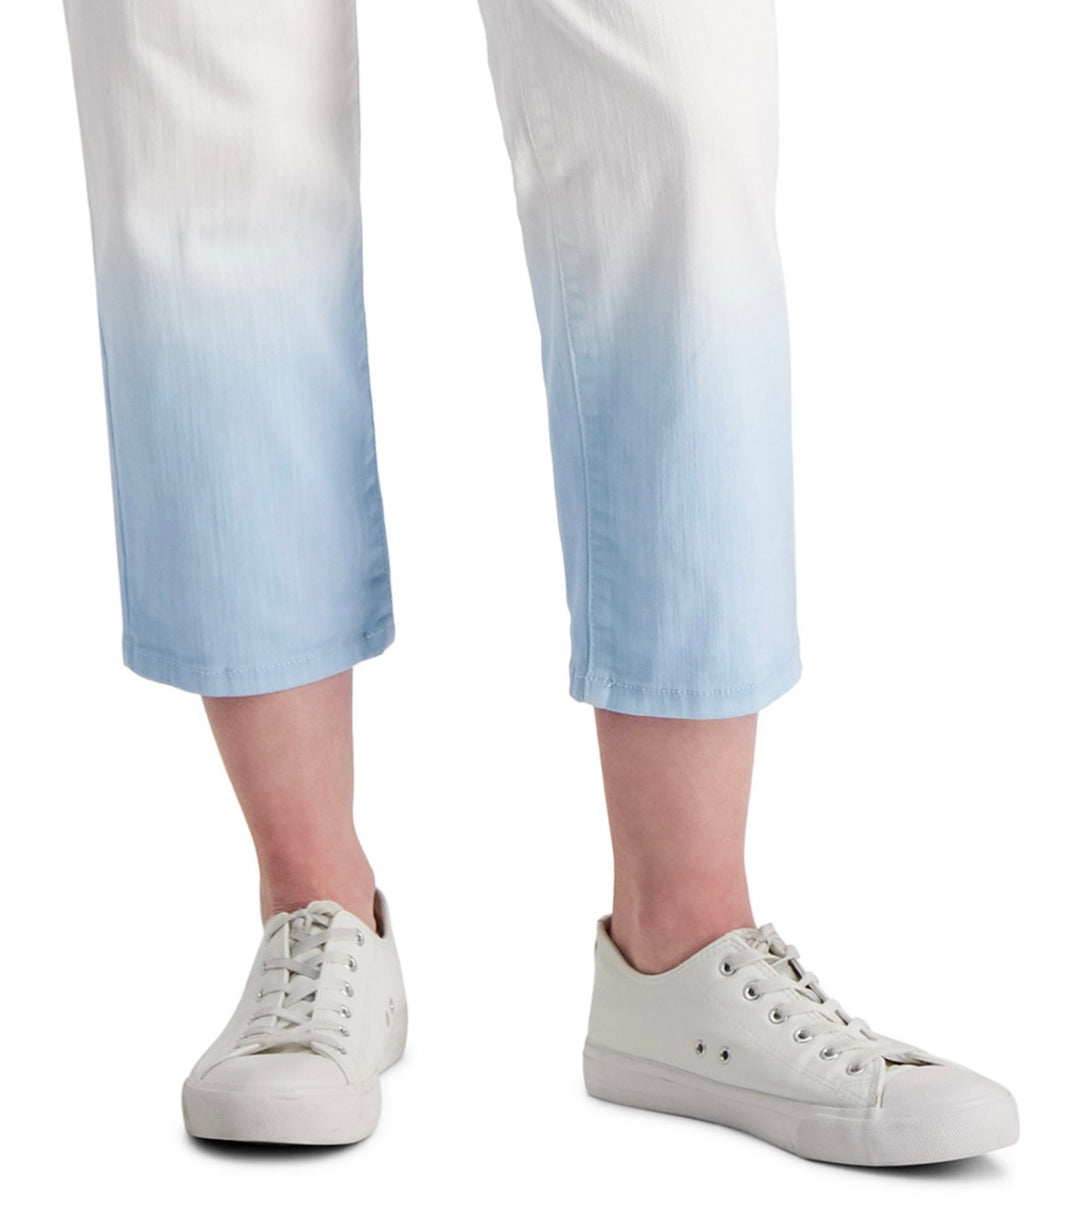 Style & Co. Women's High Rise Curvy Cropped Jeans White Dip Dye